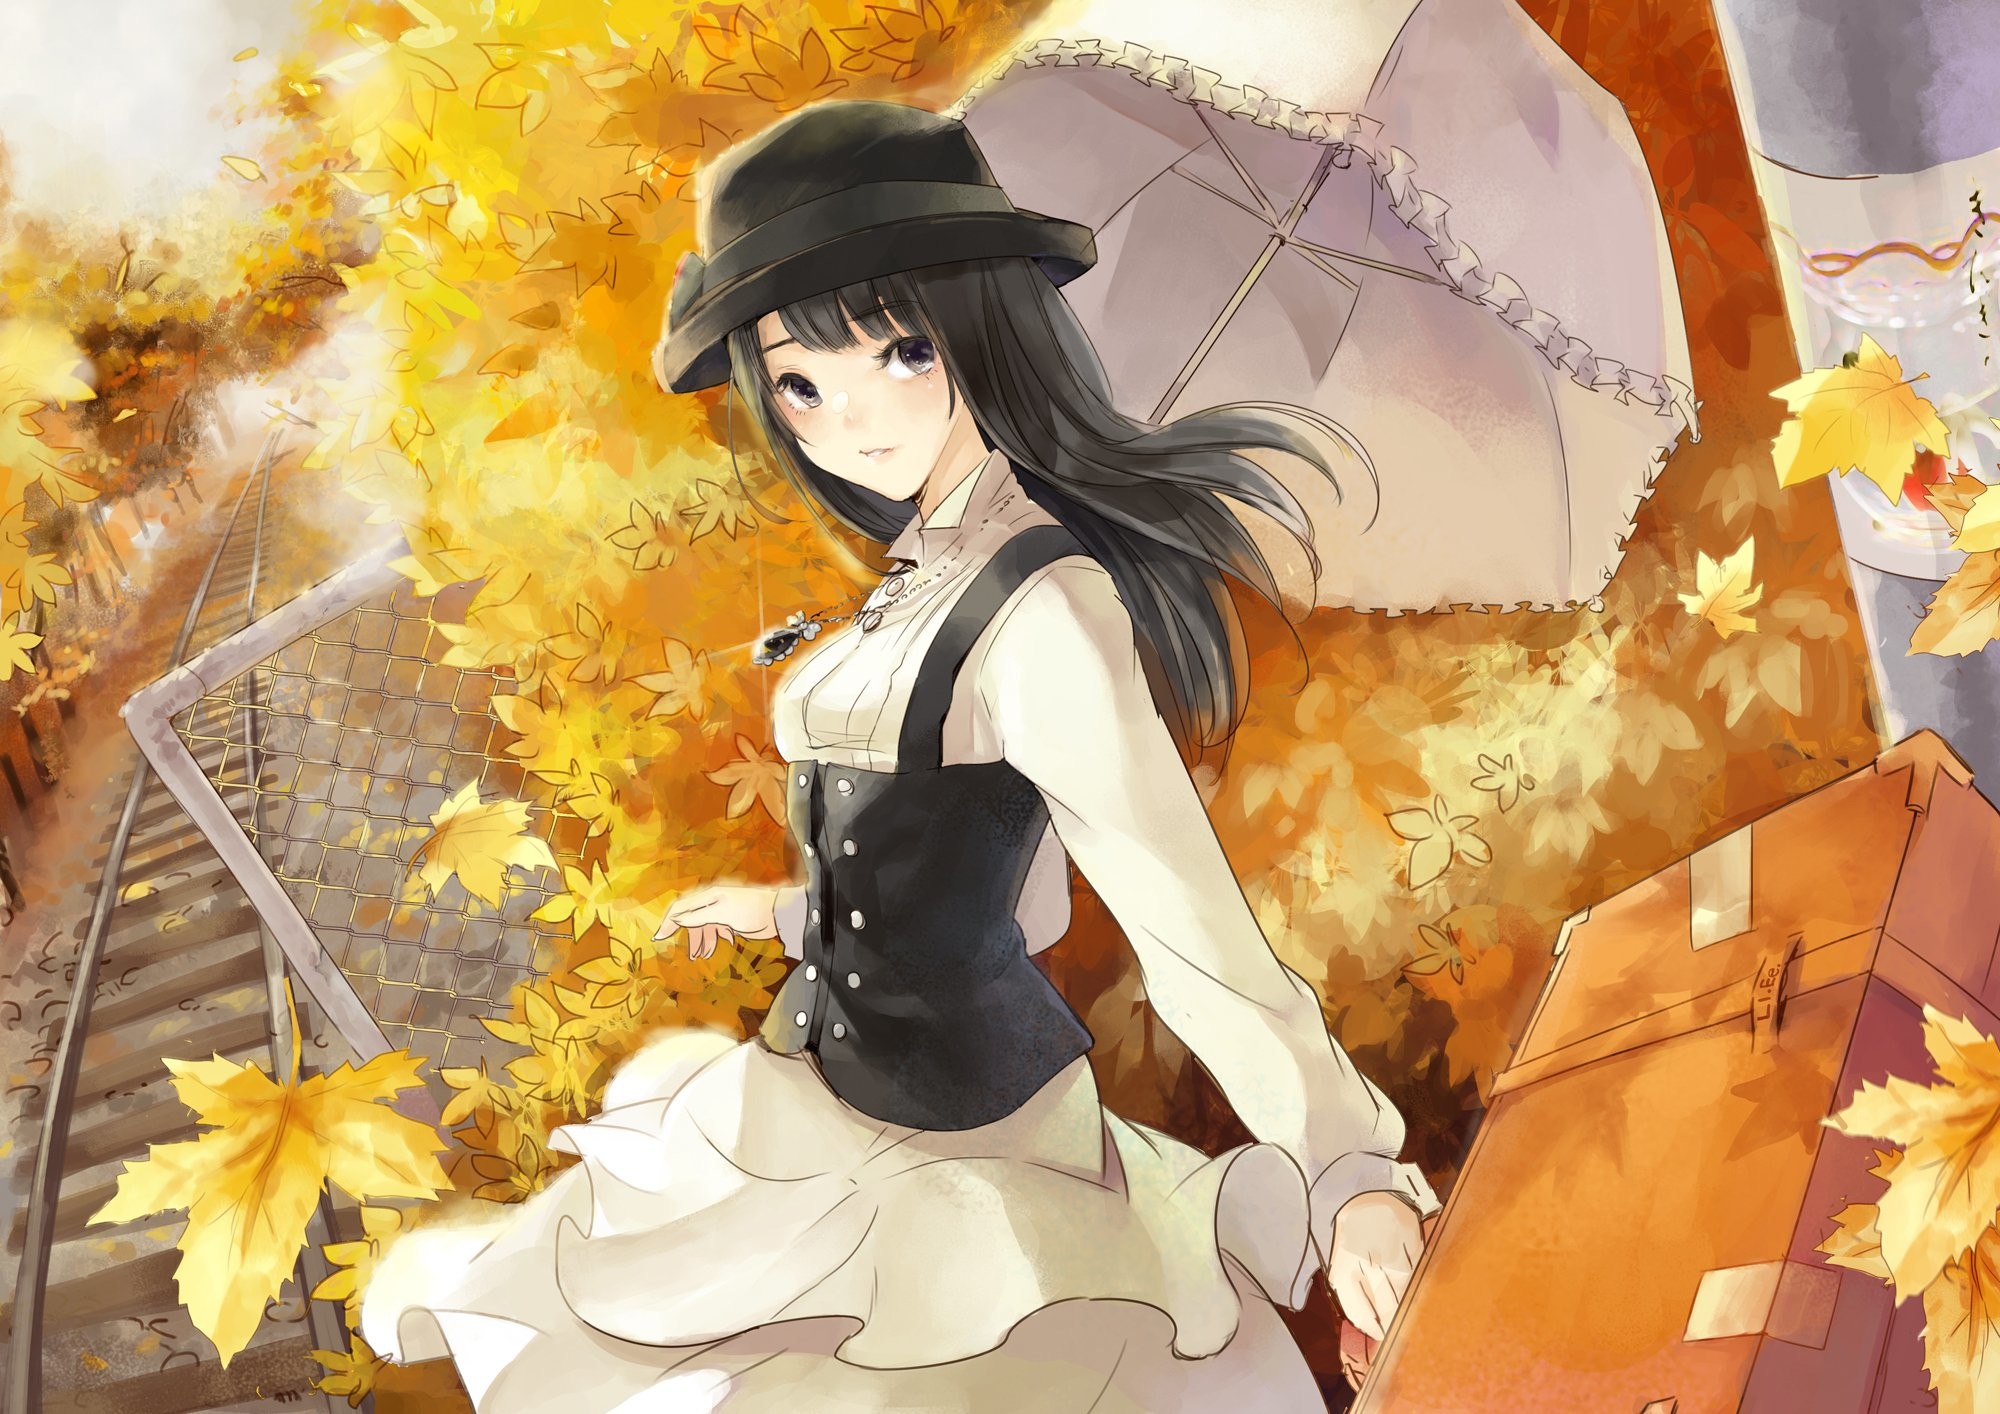 Girl dress hat umbrella leaf anime girl autumn-leaf wallpaper | |  653259 | WallpaperUP